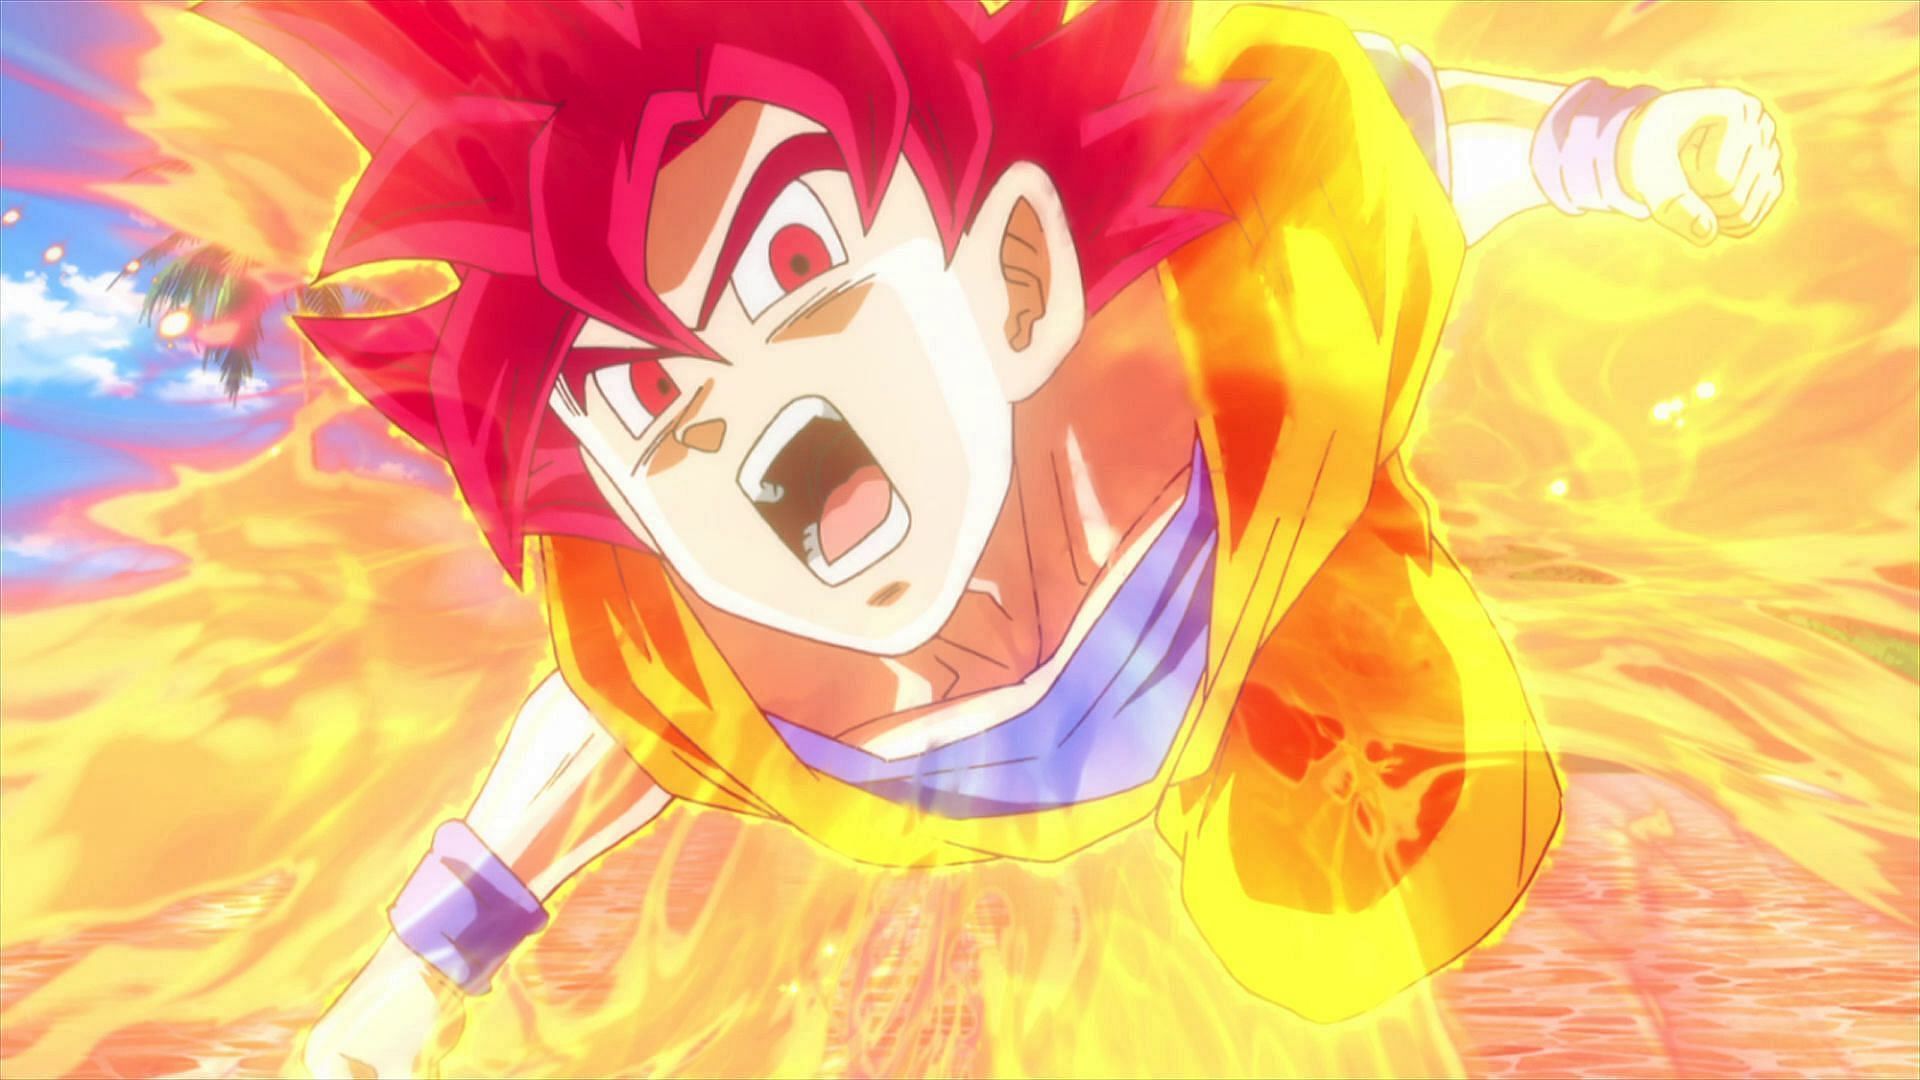 Super Saiyan God Goku, as seen in the Super anime (Image via Toei Animation)